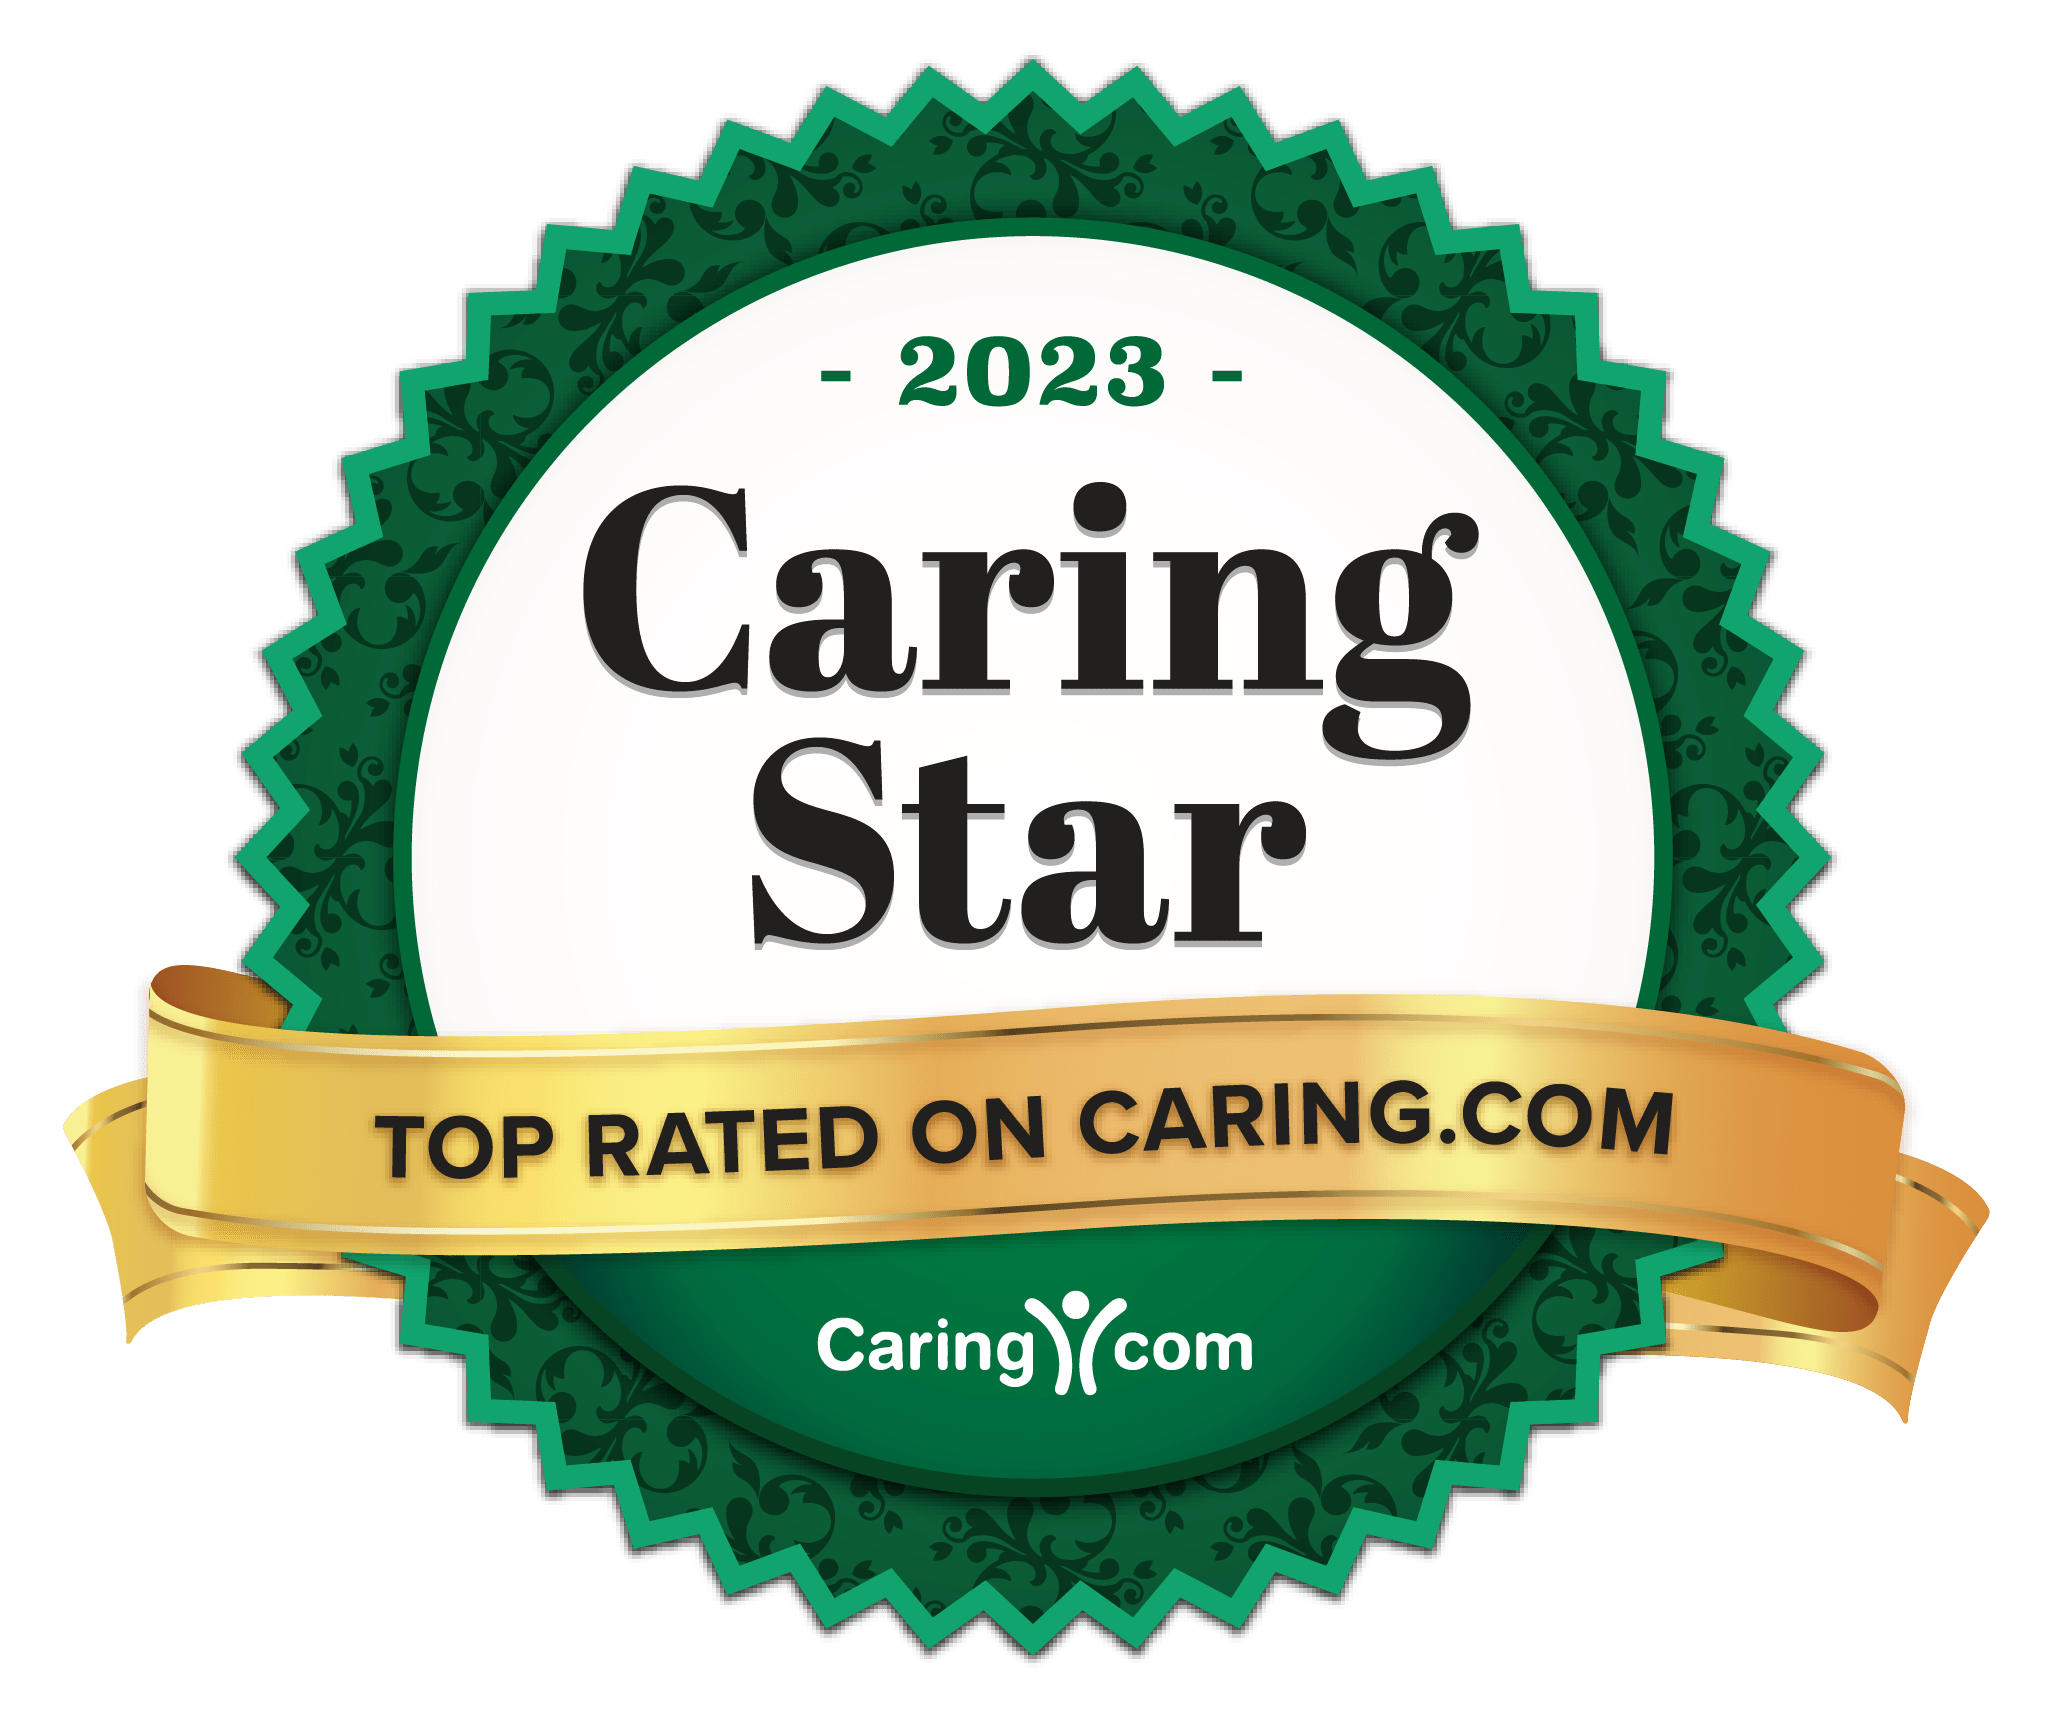 Caring Star 2023 badge